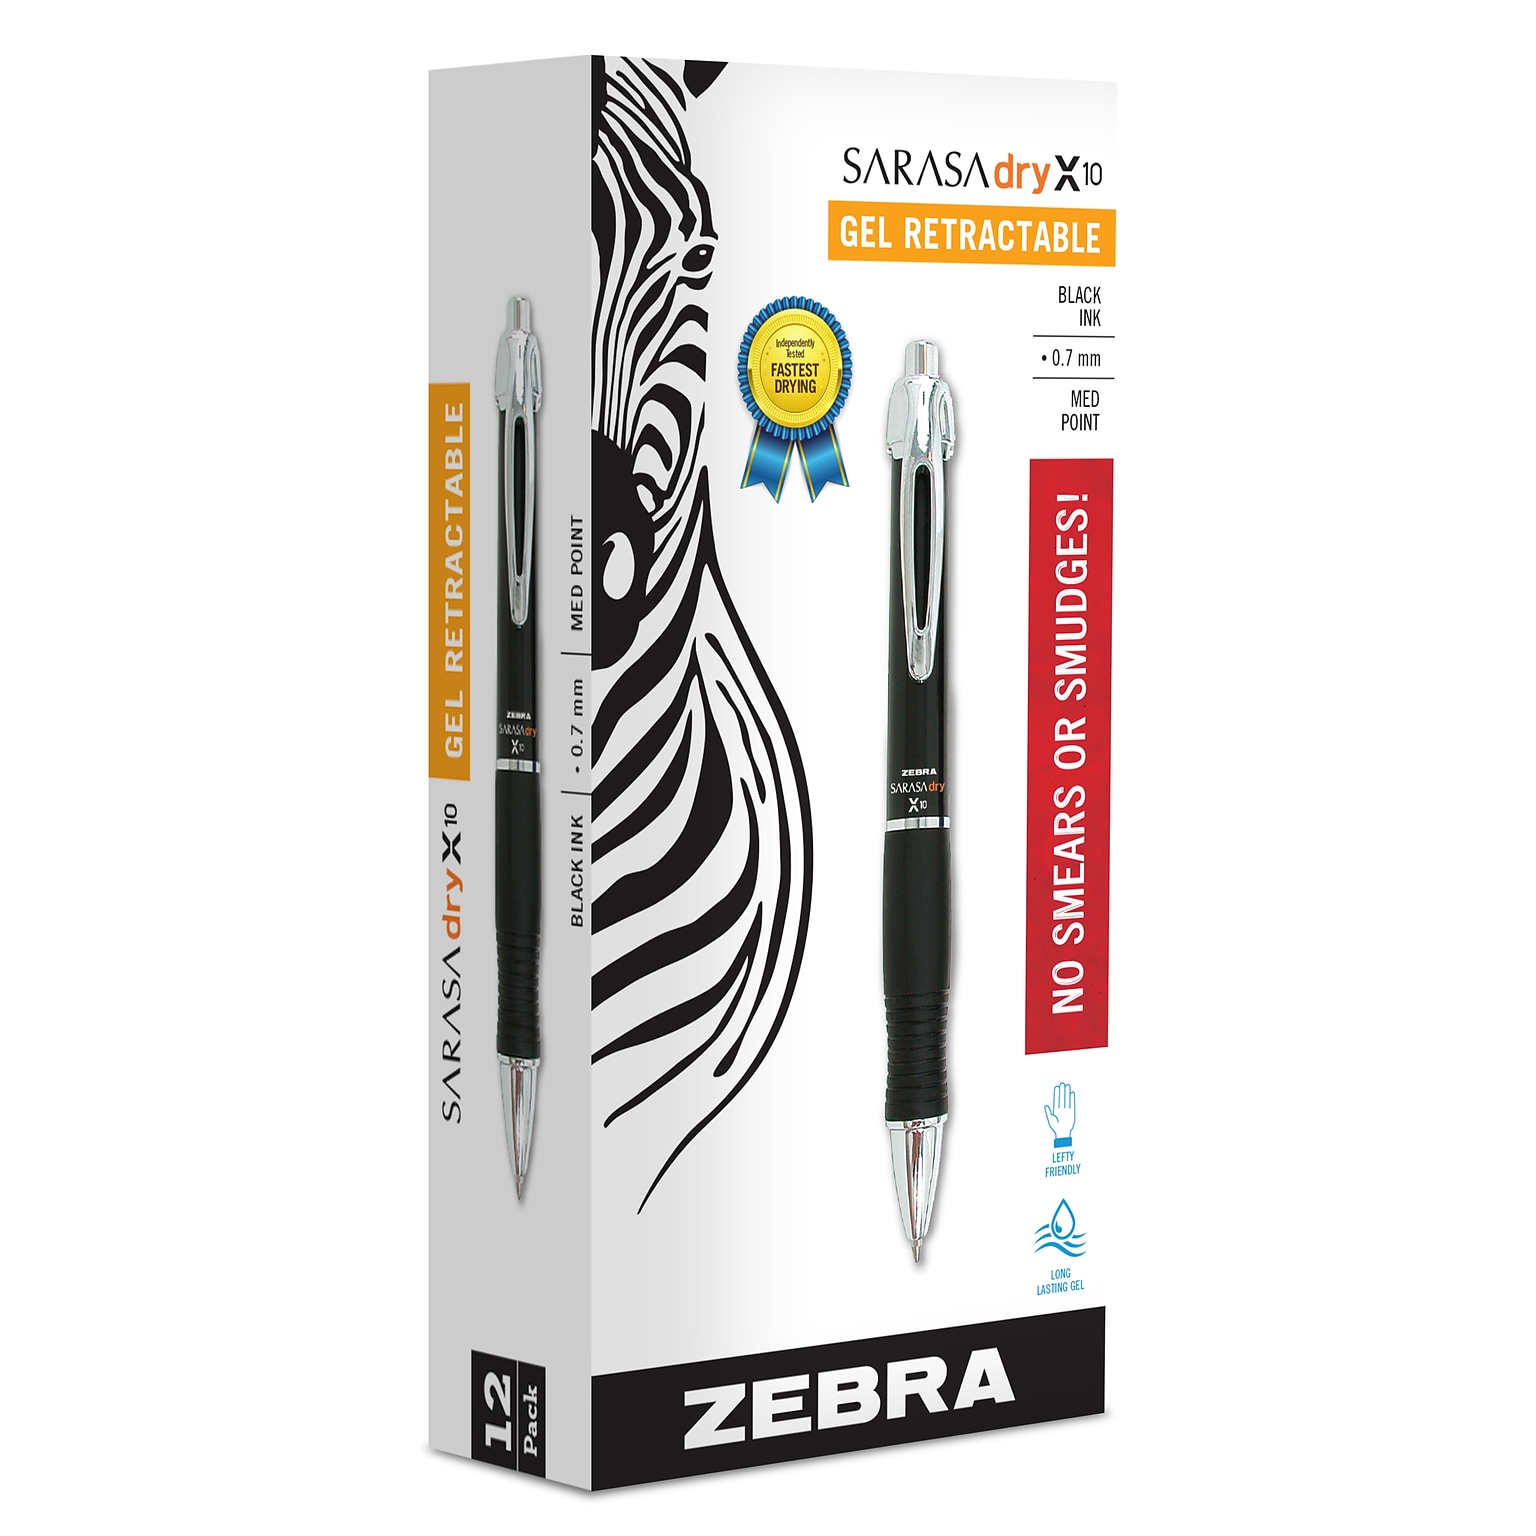 Zebra Sarasa Dry X10 Retractable Gel Pen, Medium Point, 0.7mm, Black Ink, Dozen (42610)